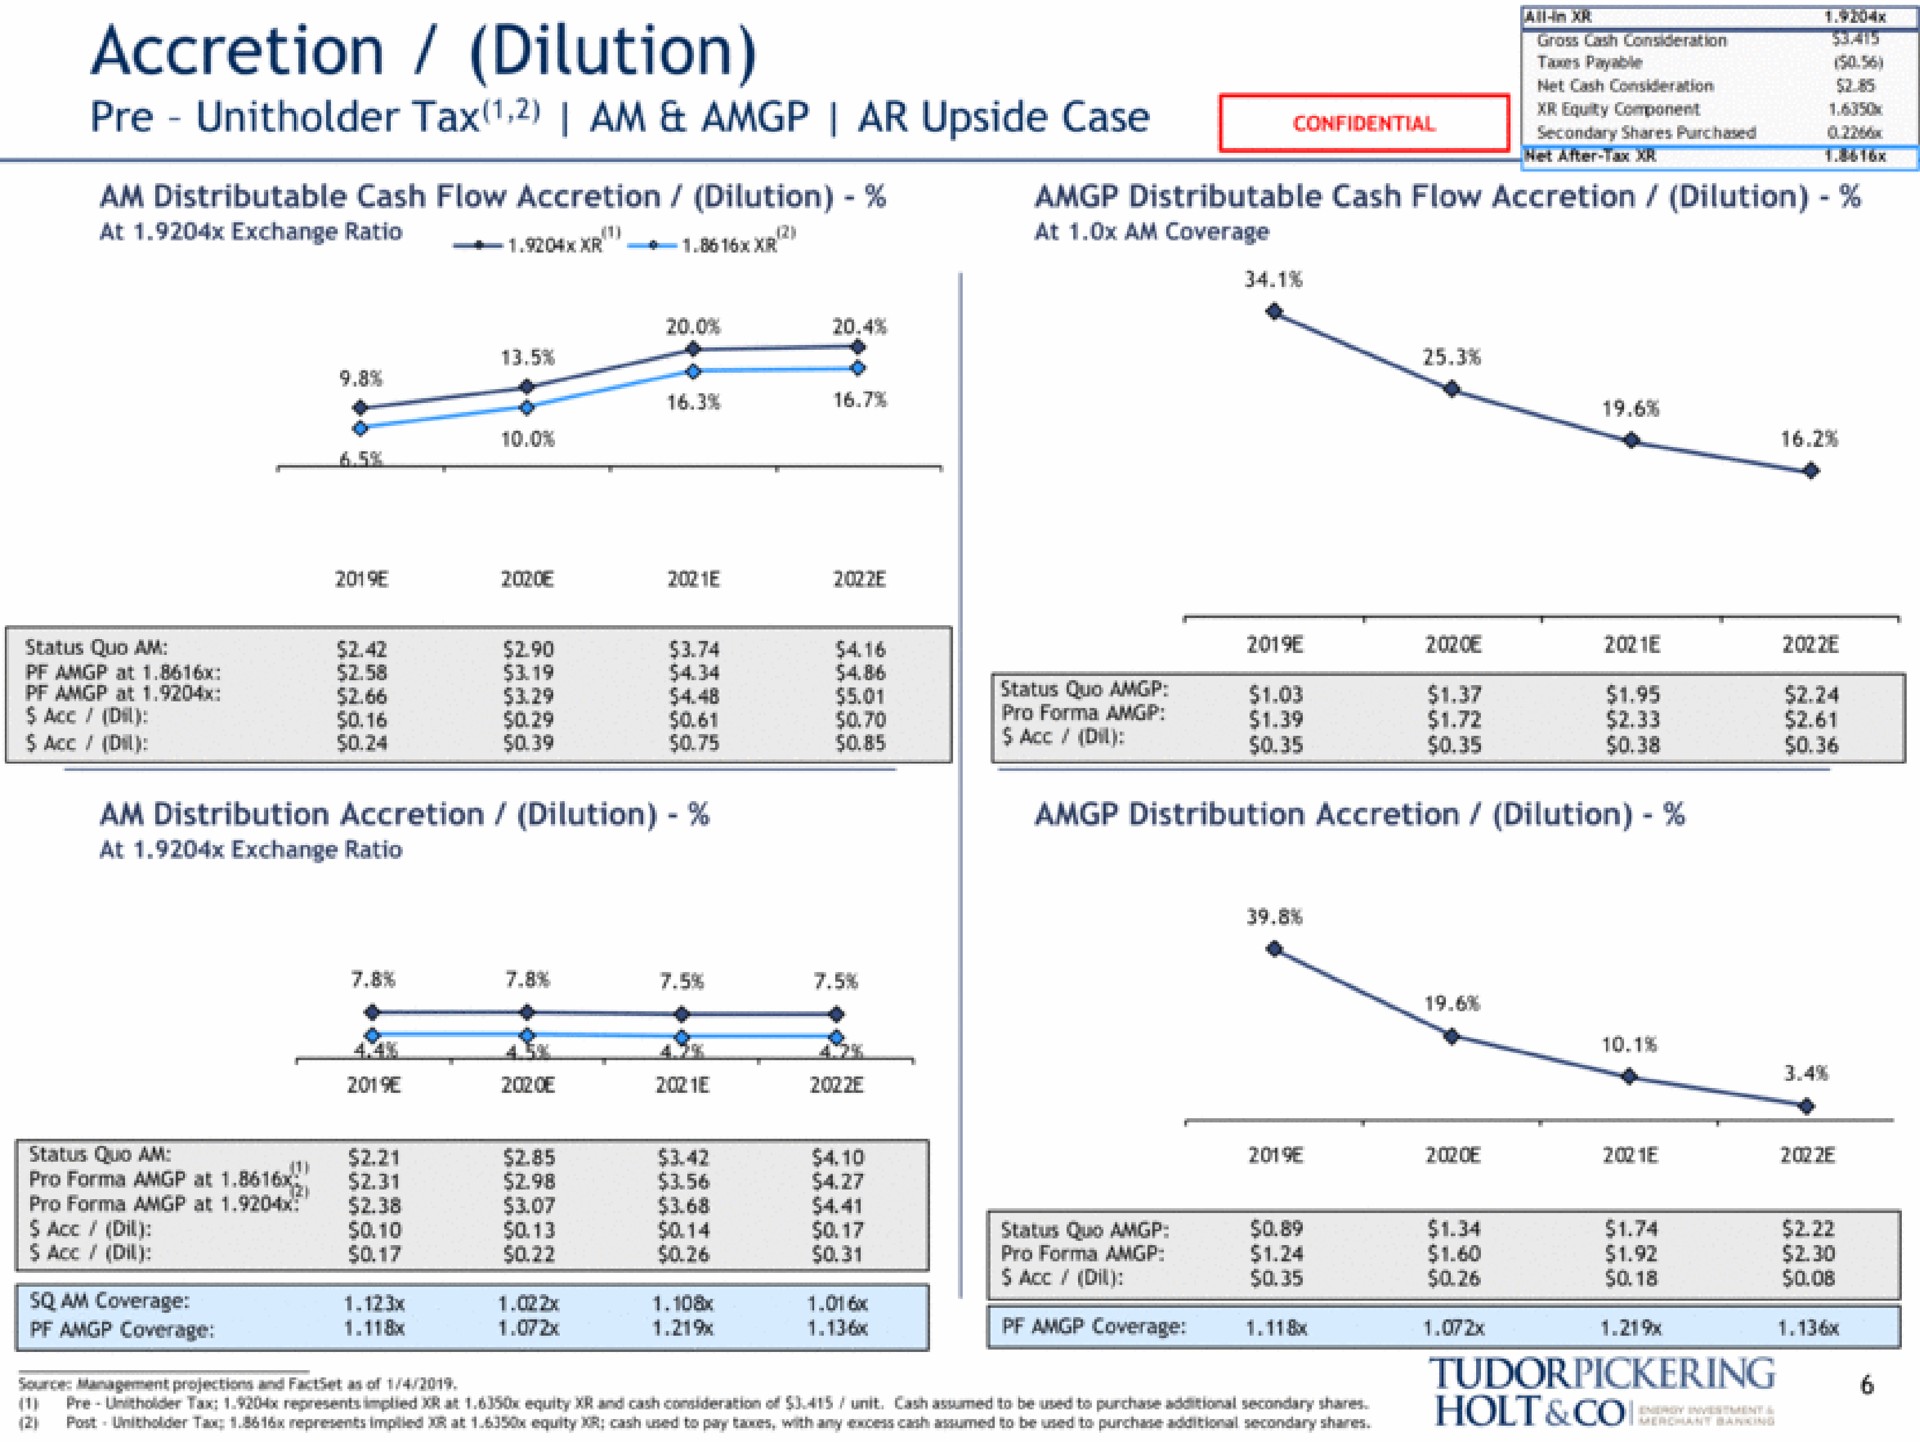 accretion dilution tax am upside case | Tudor, Pickering, Holt & Co